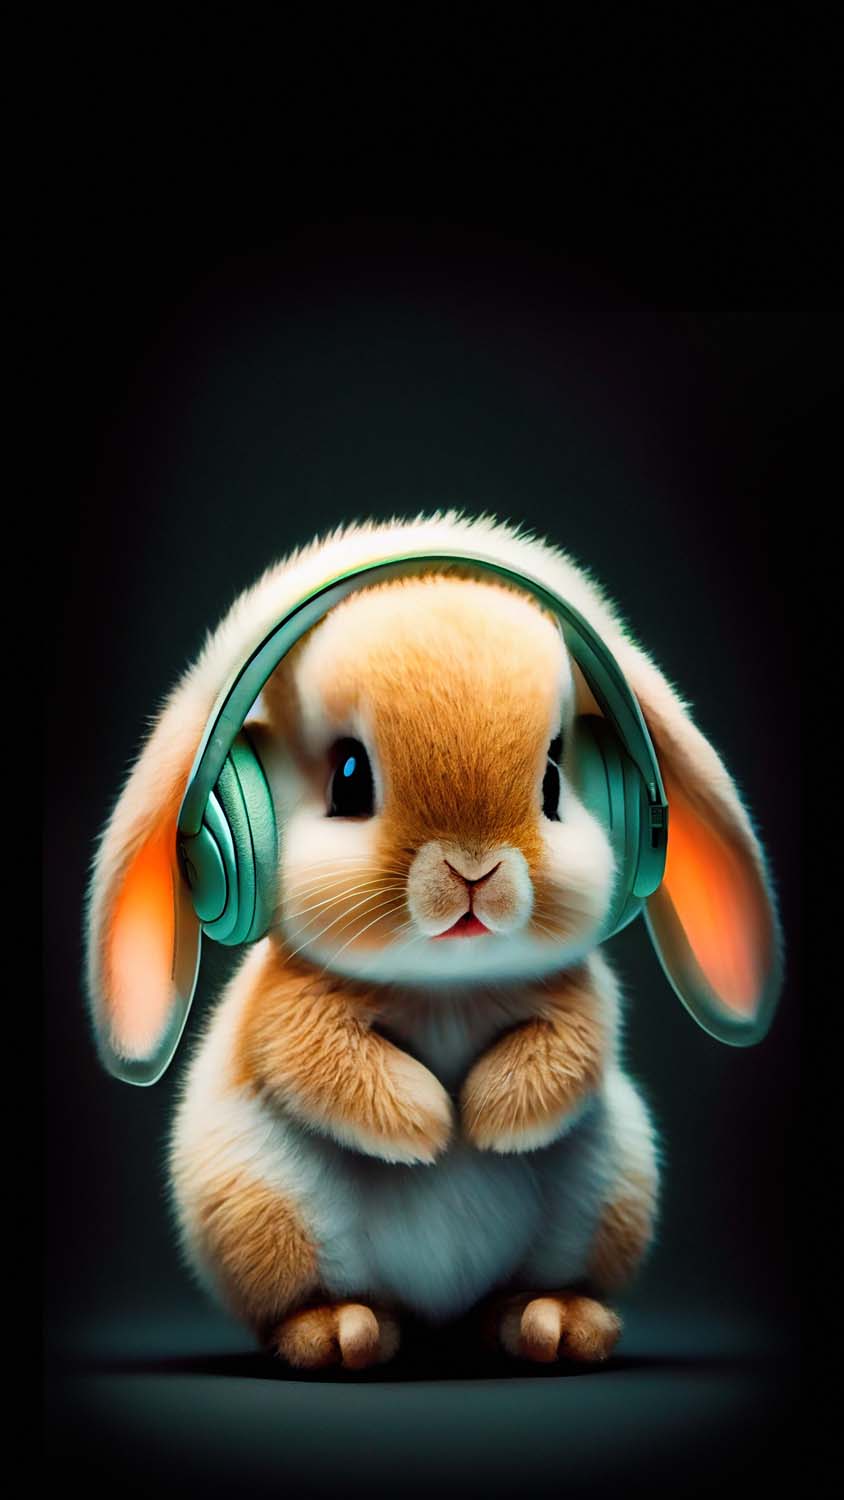 Cute Bunny wallpaper by Lenoz0 on DeviantArt